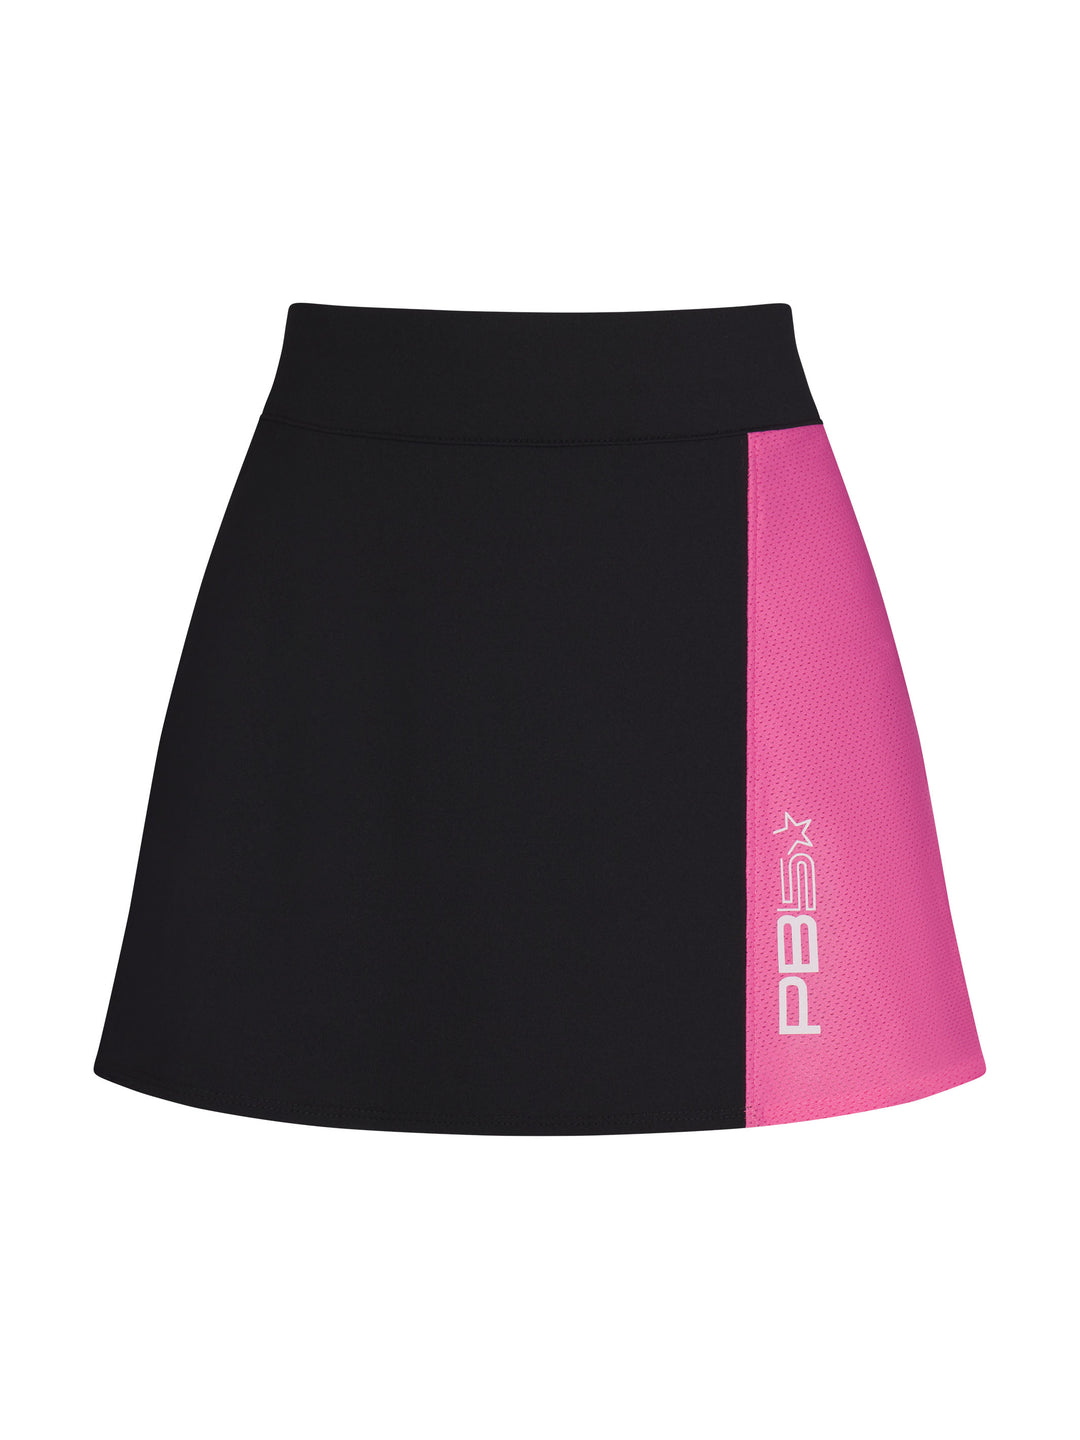 Mesh Panel Pickleball Skirt front view in Black and Pink. Logo on bottom left side.